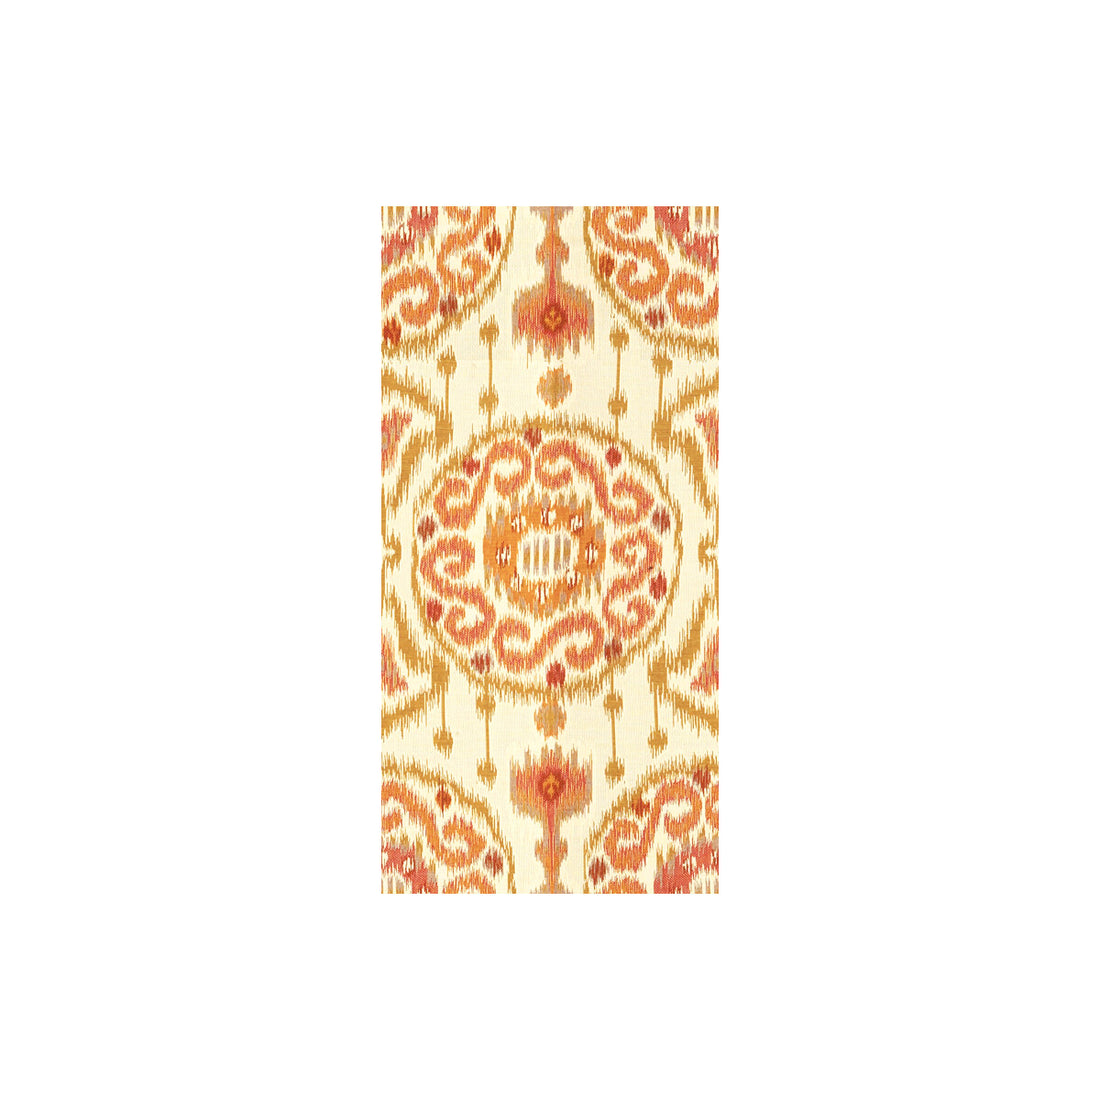 Kravet Design fabric in 31393-124 color - pattern 31393.124.0 - by Kravet Design in the Gis collection